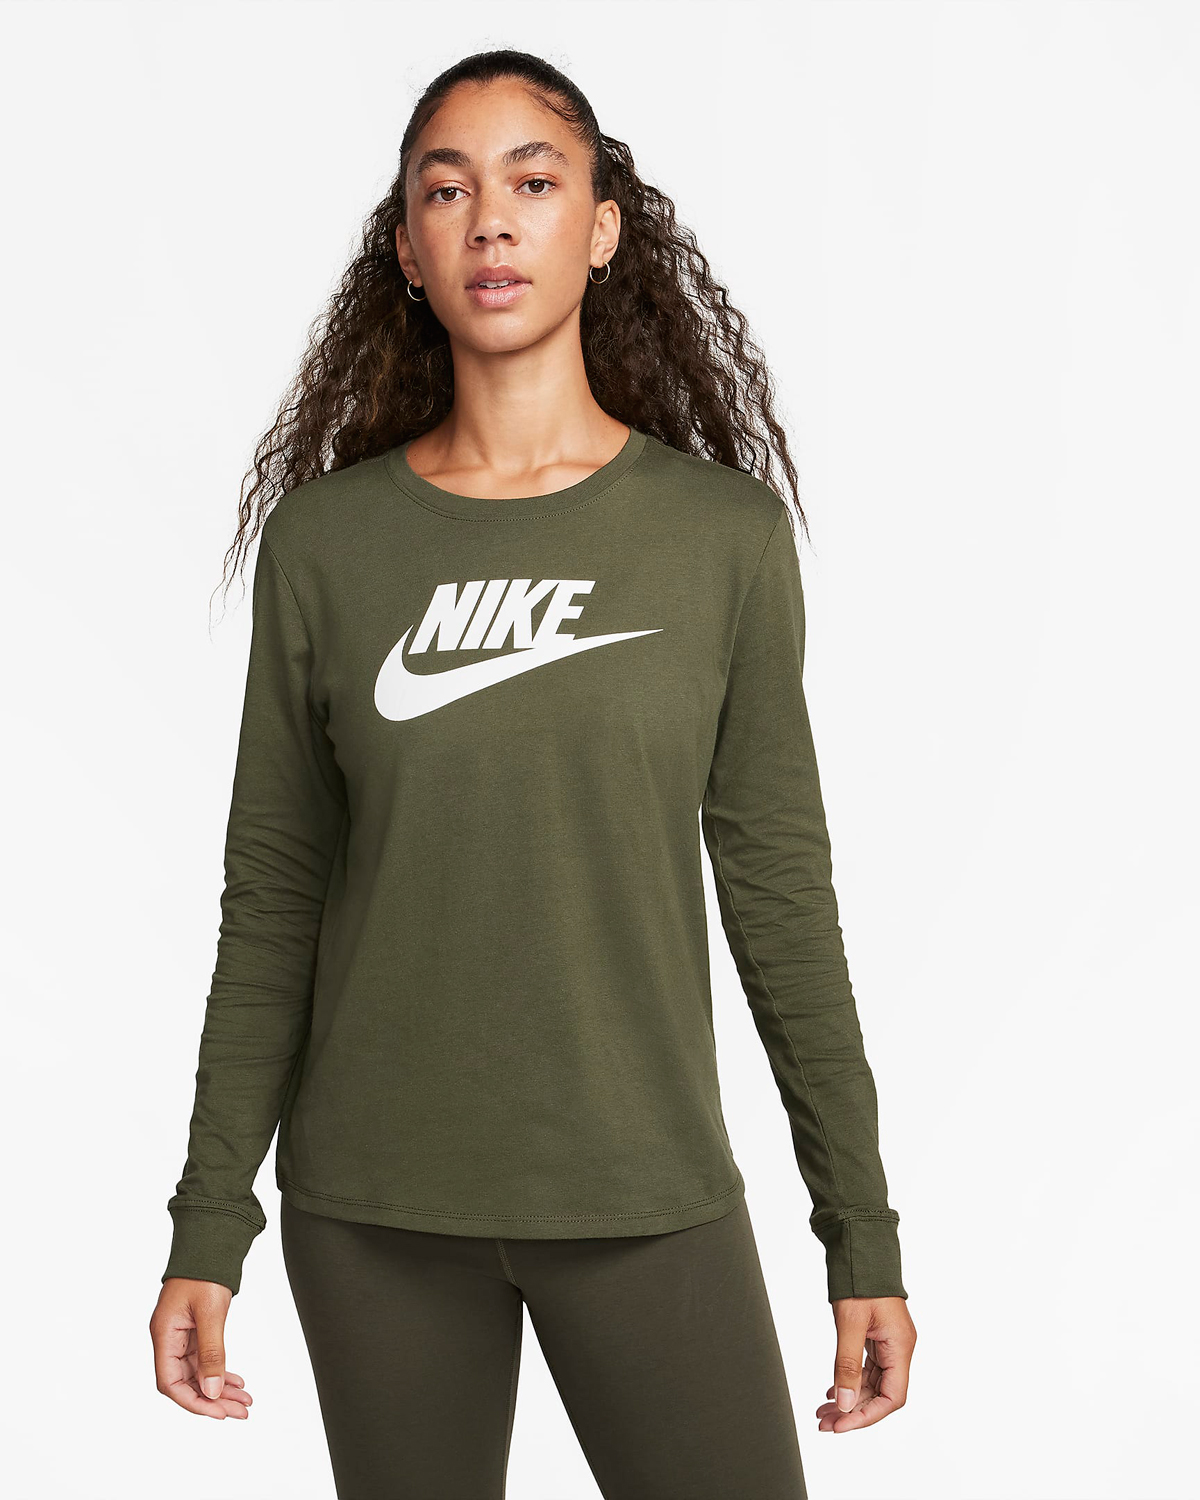 Nike Sportswear Womens Long Sleeve T Shirt Olive Cargo Khaki